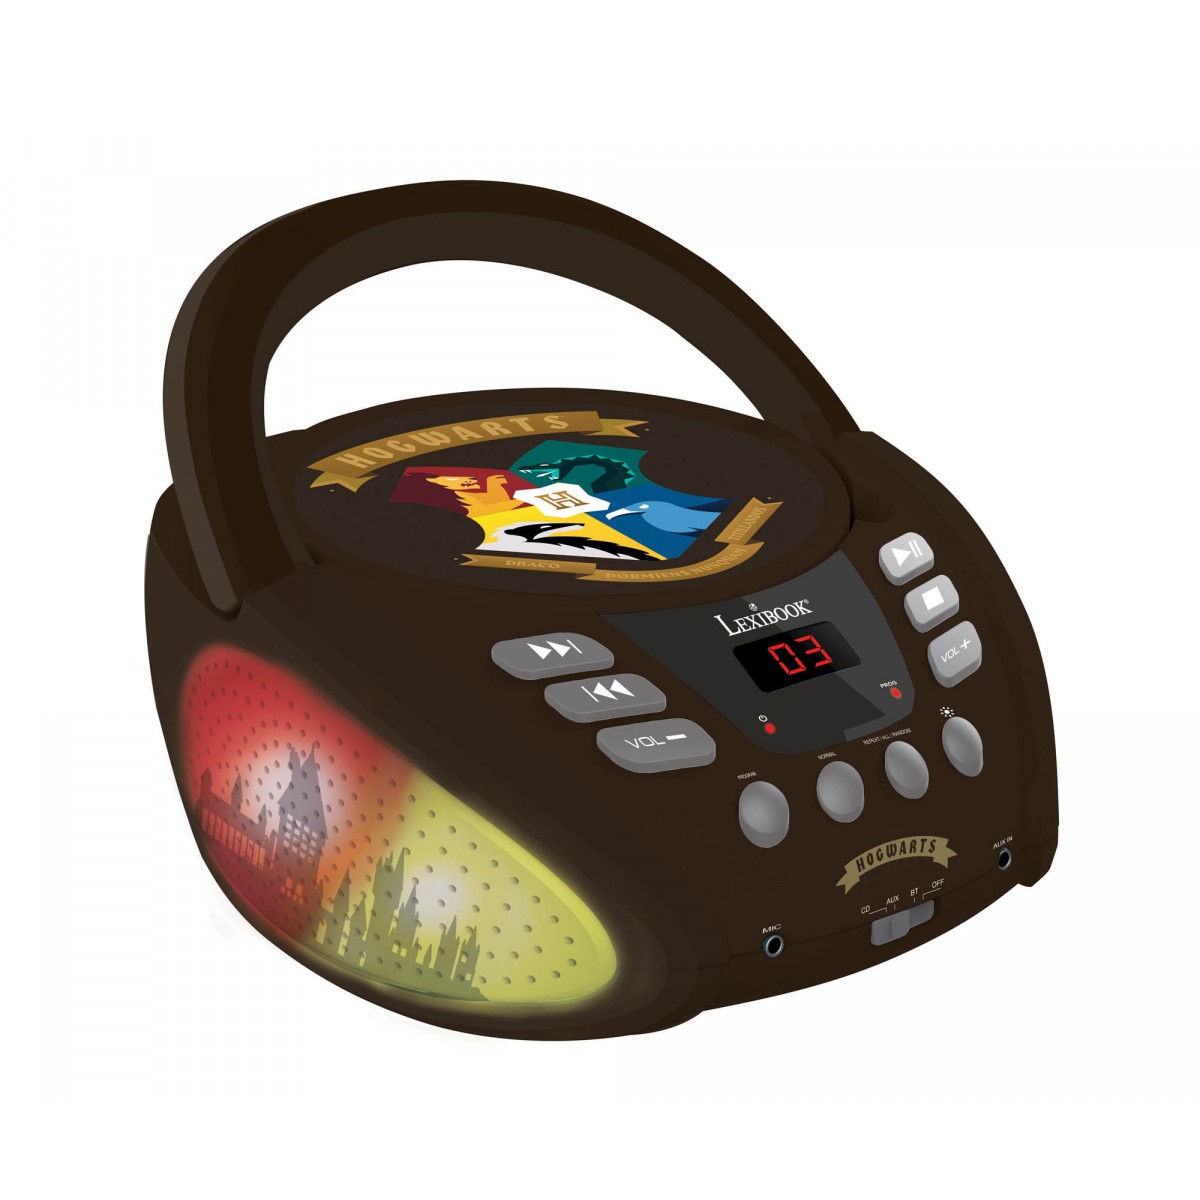 Warner Harry Potter - Bluetooth CD player for kids – Portable